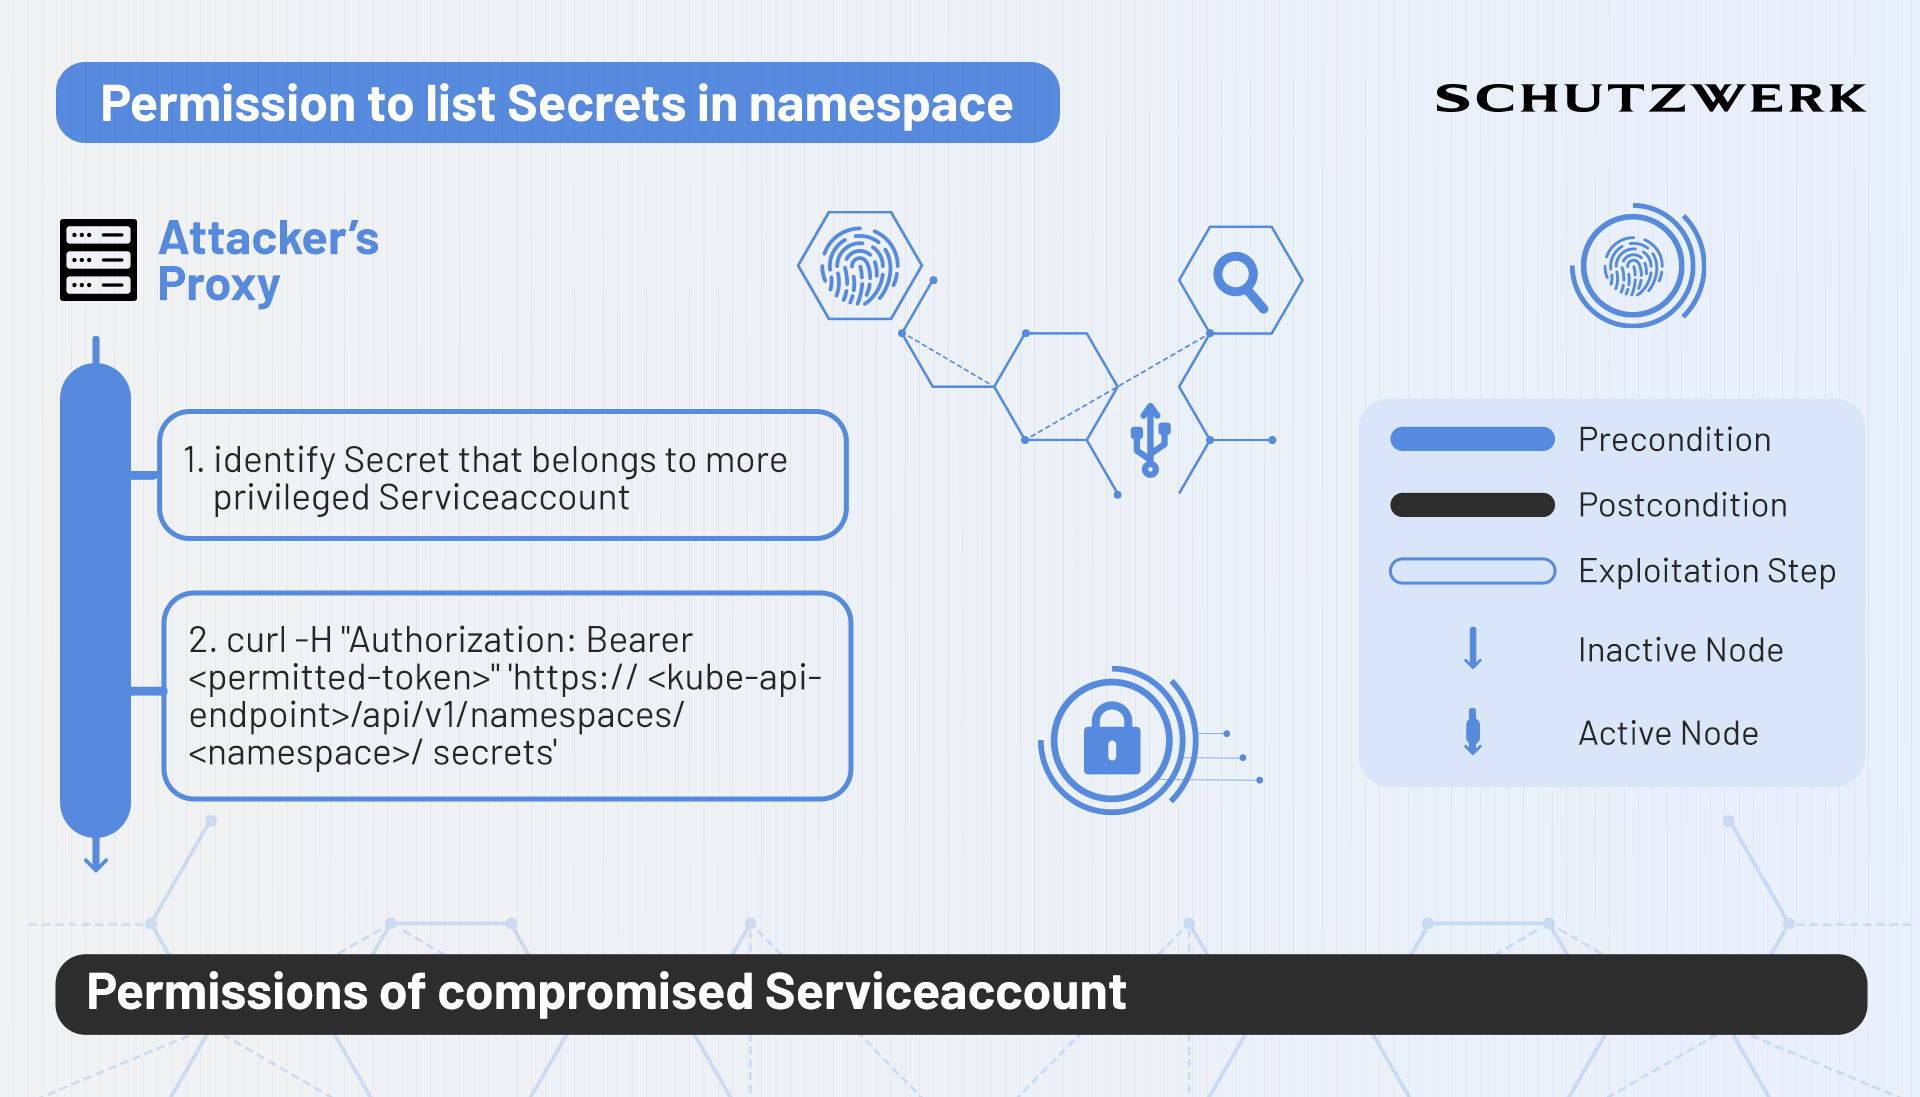 Read Secrets to obtain a Serviceaccounts authorization token.